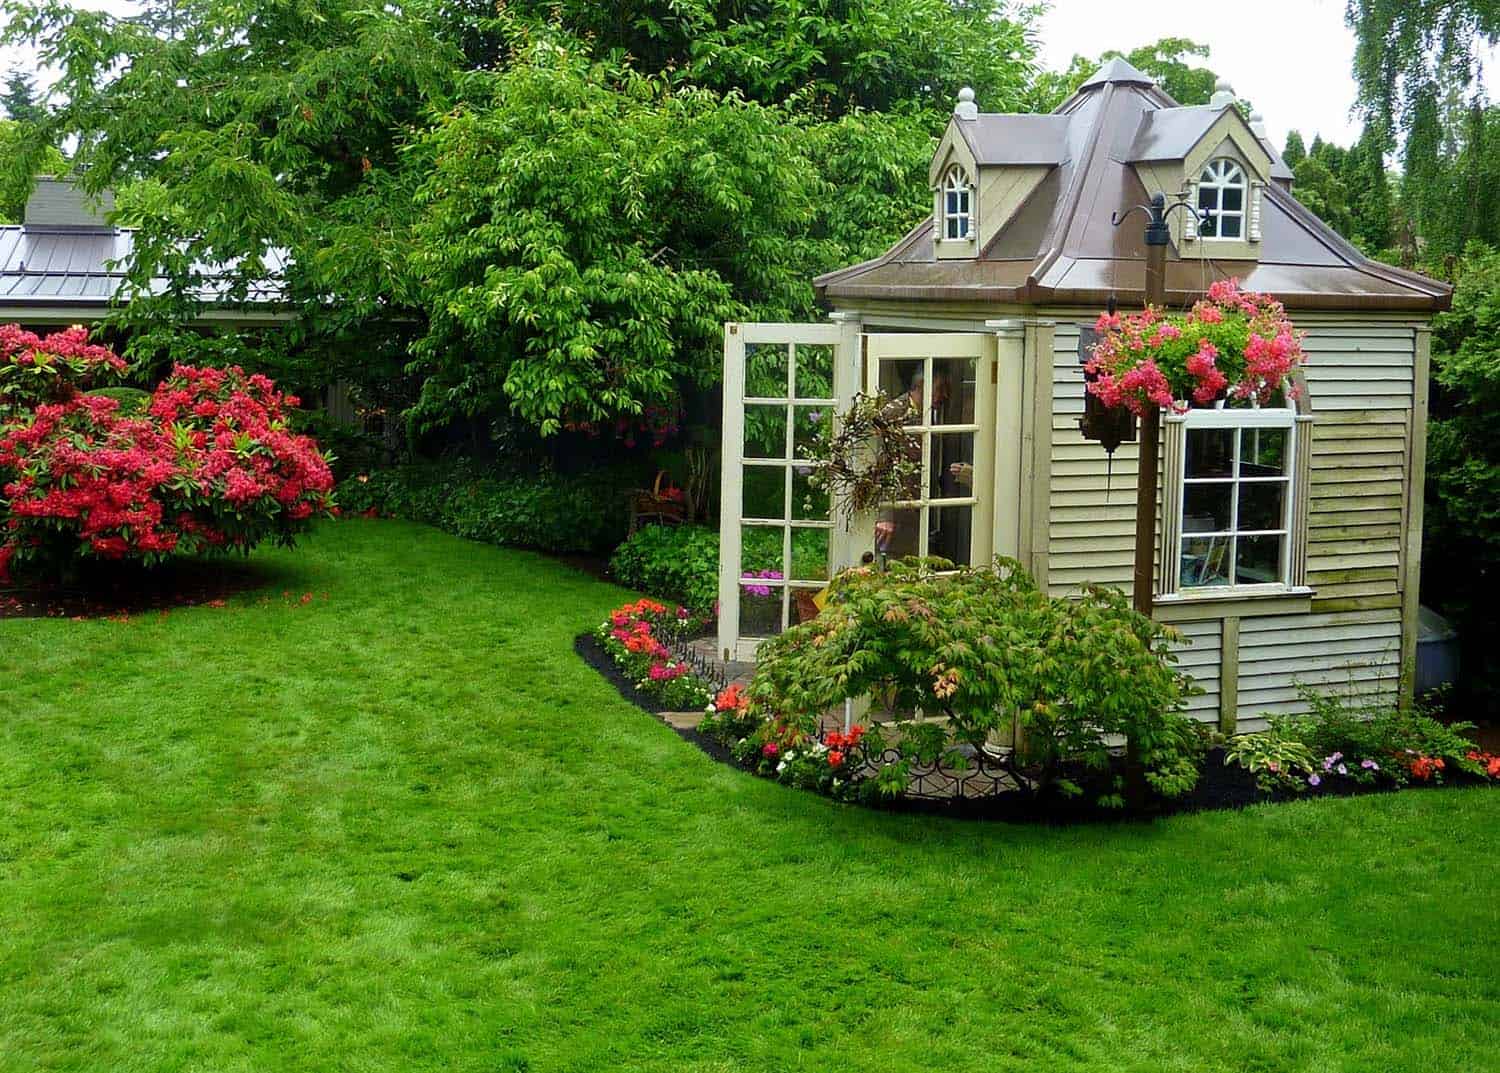  gardening shed ideas